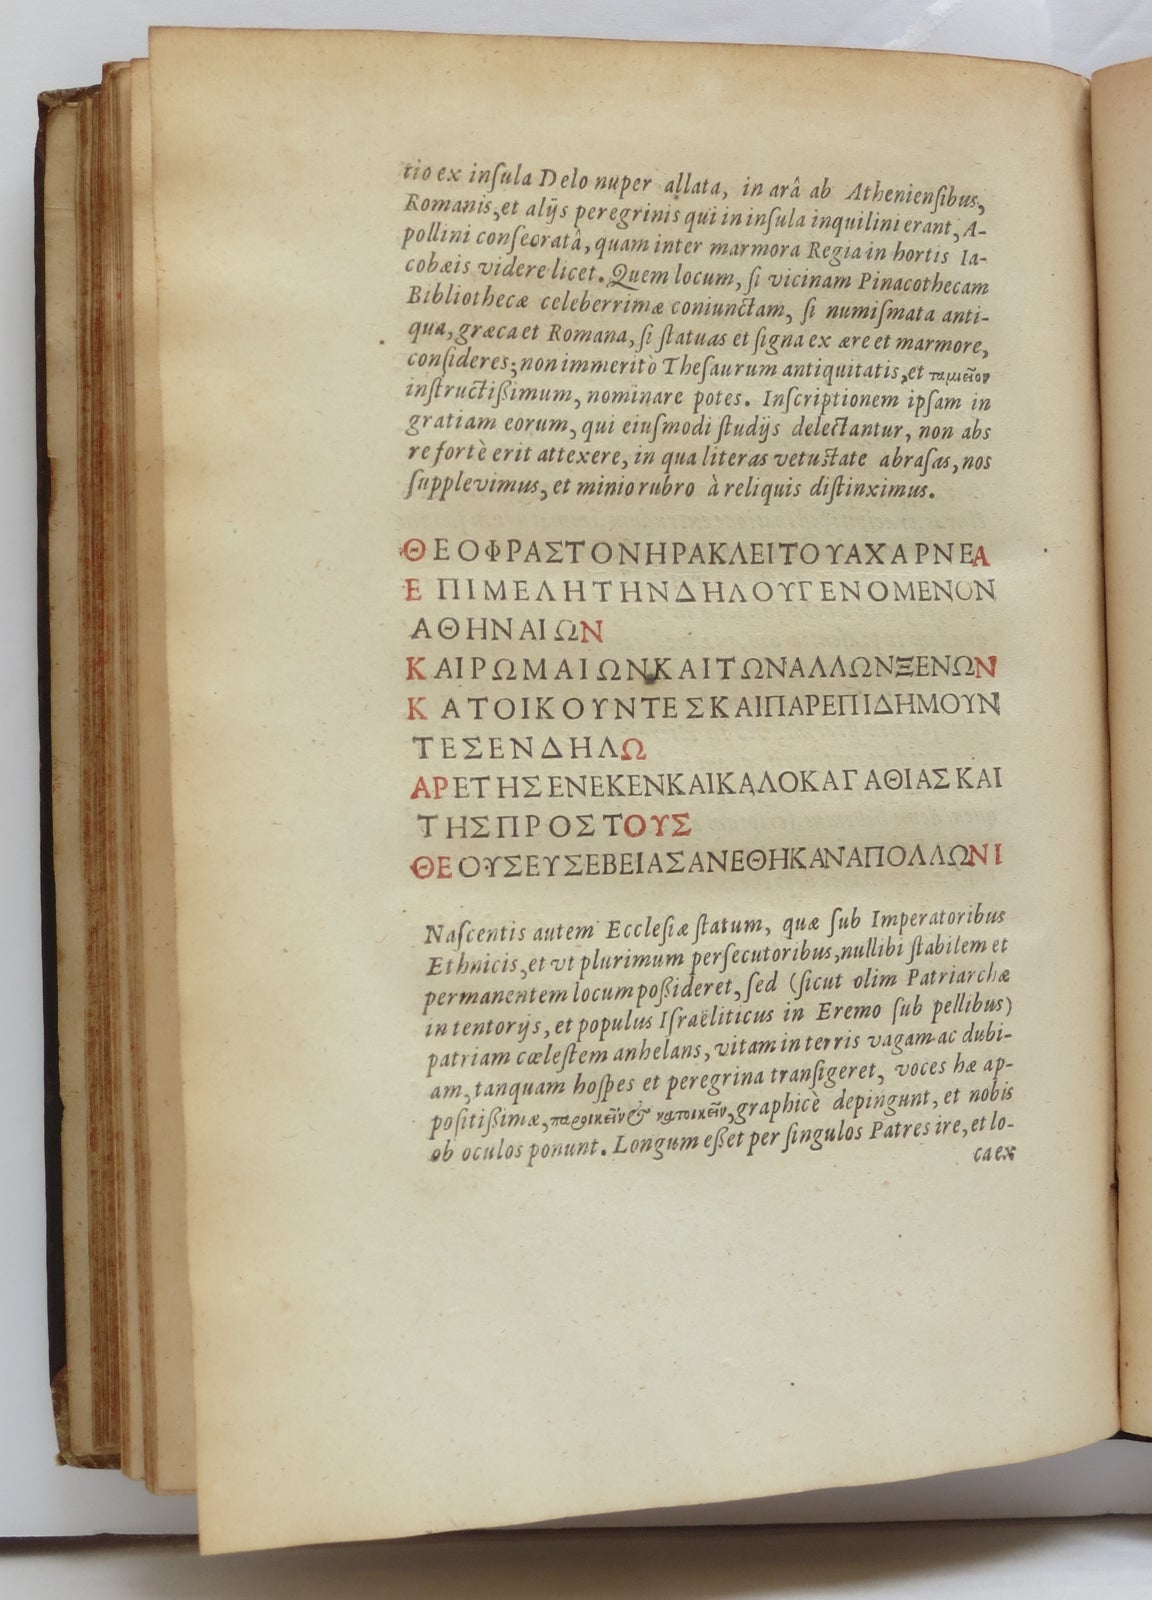 [Title in Greek] Clementis ad Corinthios Epistola Prior.